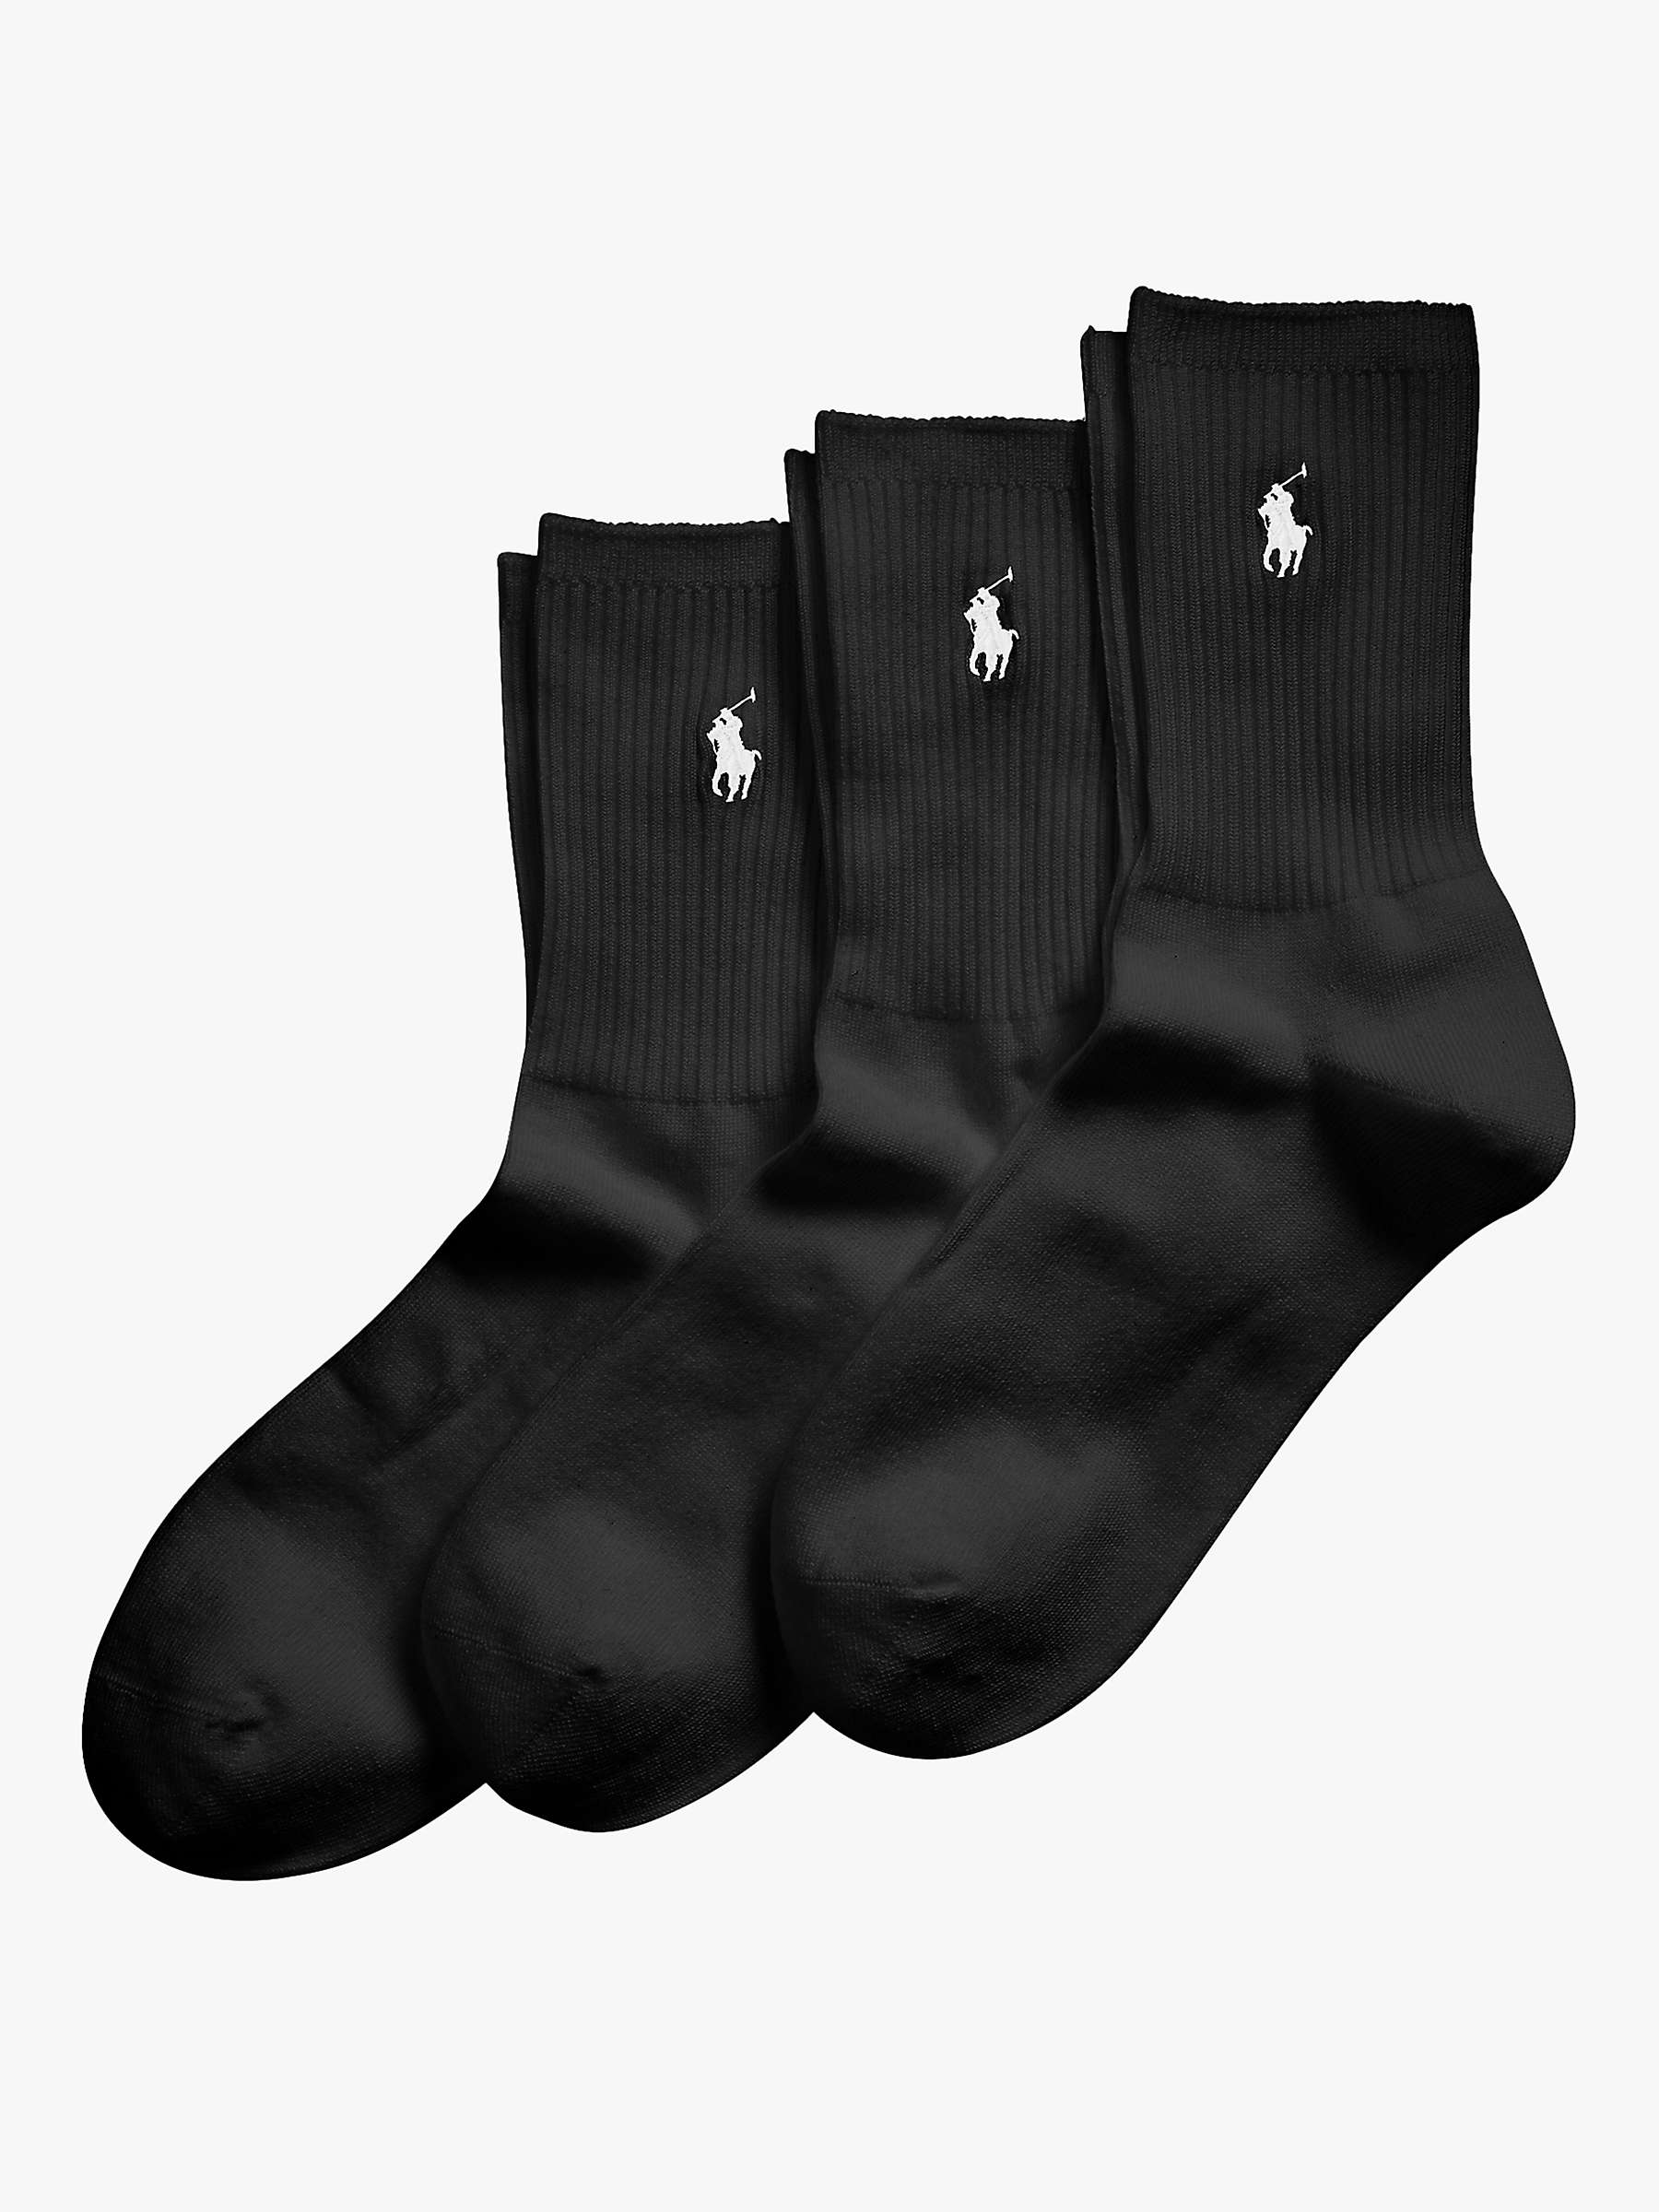 Buy Polo Ralph Lauren Ankle Socks, Pack of 3 Online at johnlewis.com